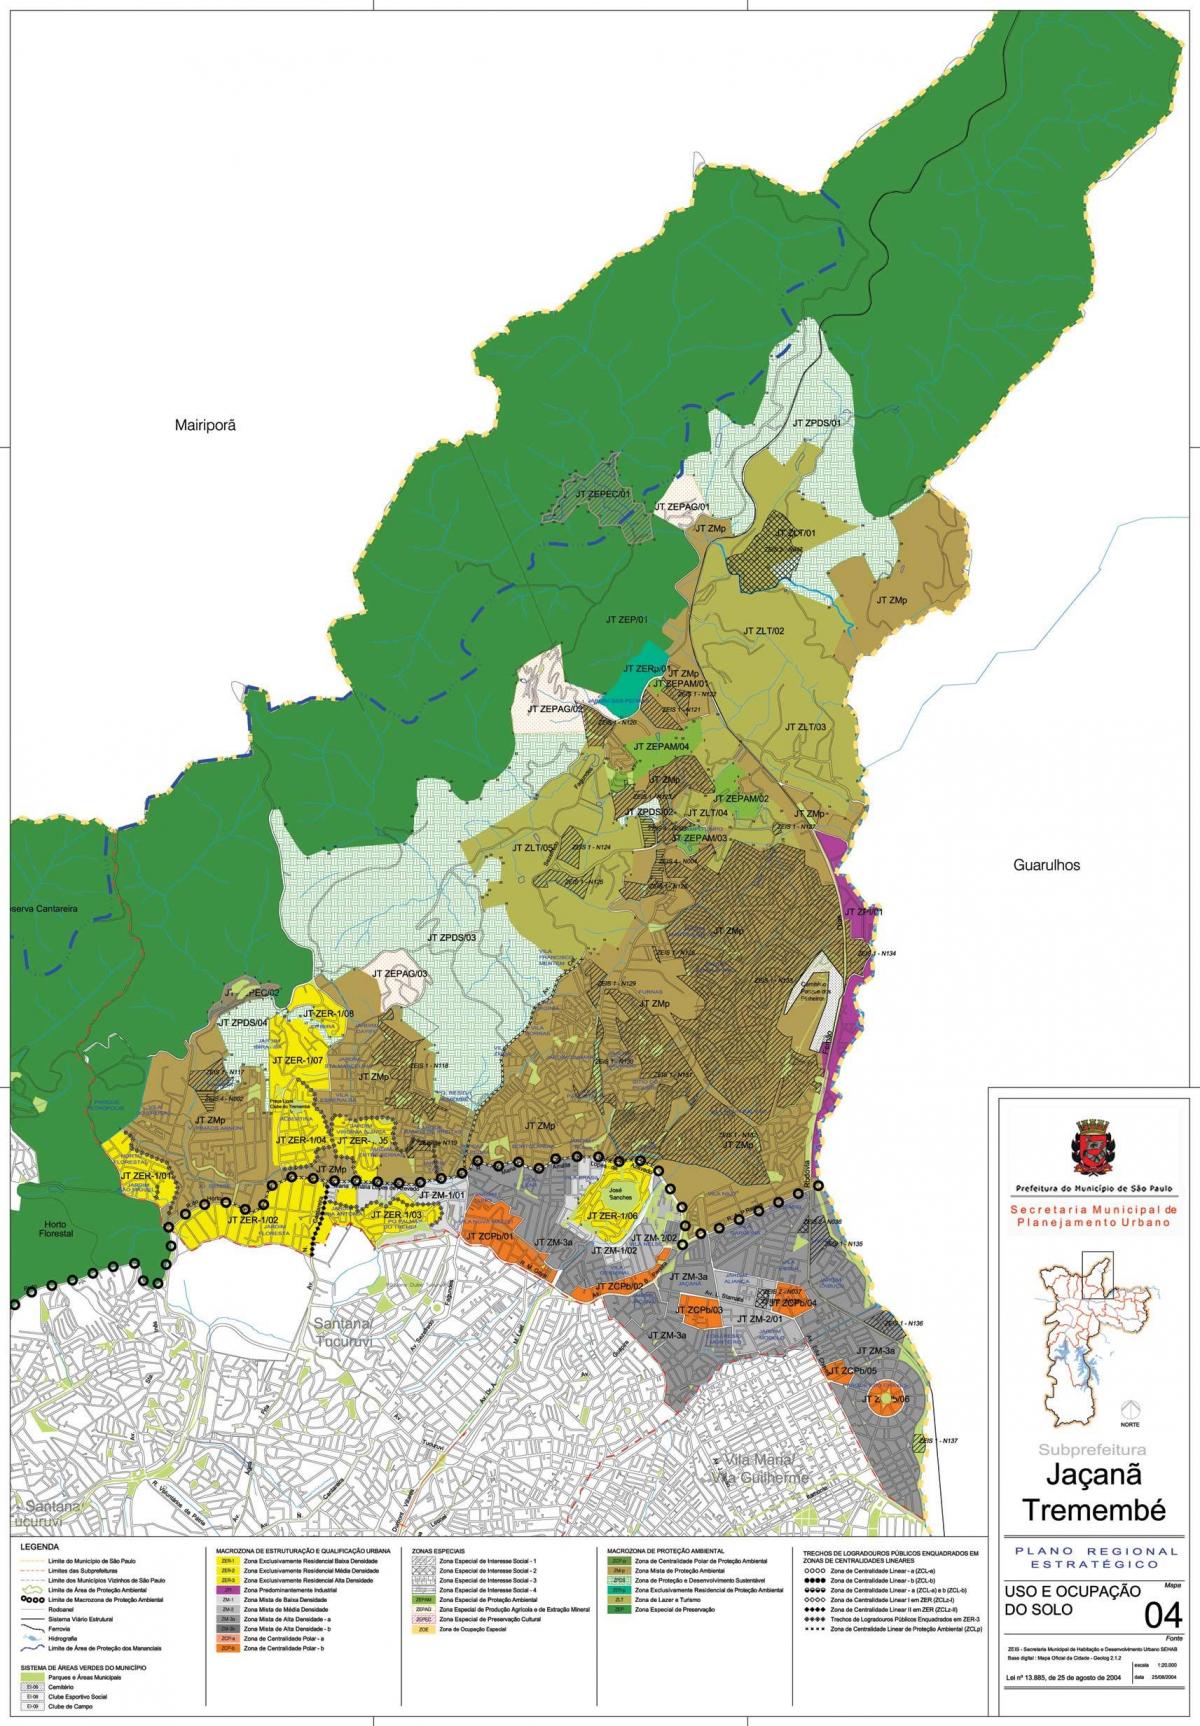 Map of Jaçanã-Tremembé São Paulo - Occupation of the soil